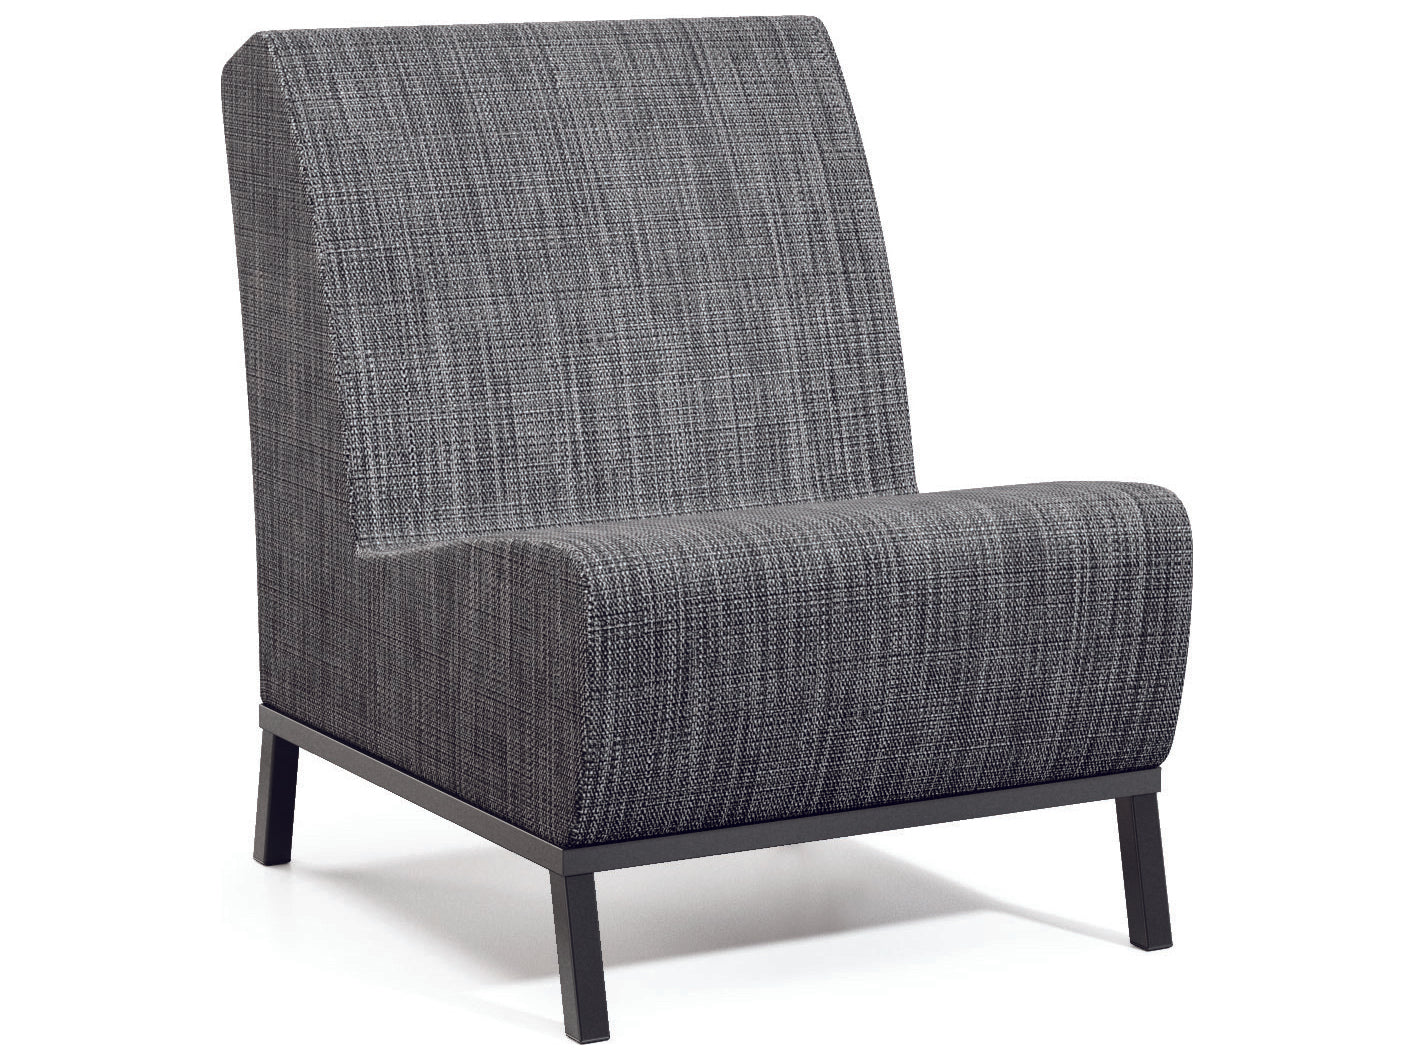 Homecrest Revive Air Sensation Sling Aluminum Modular Lounge Chair